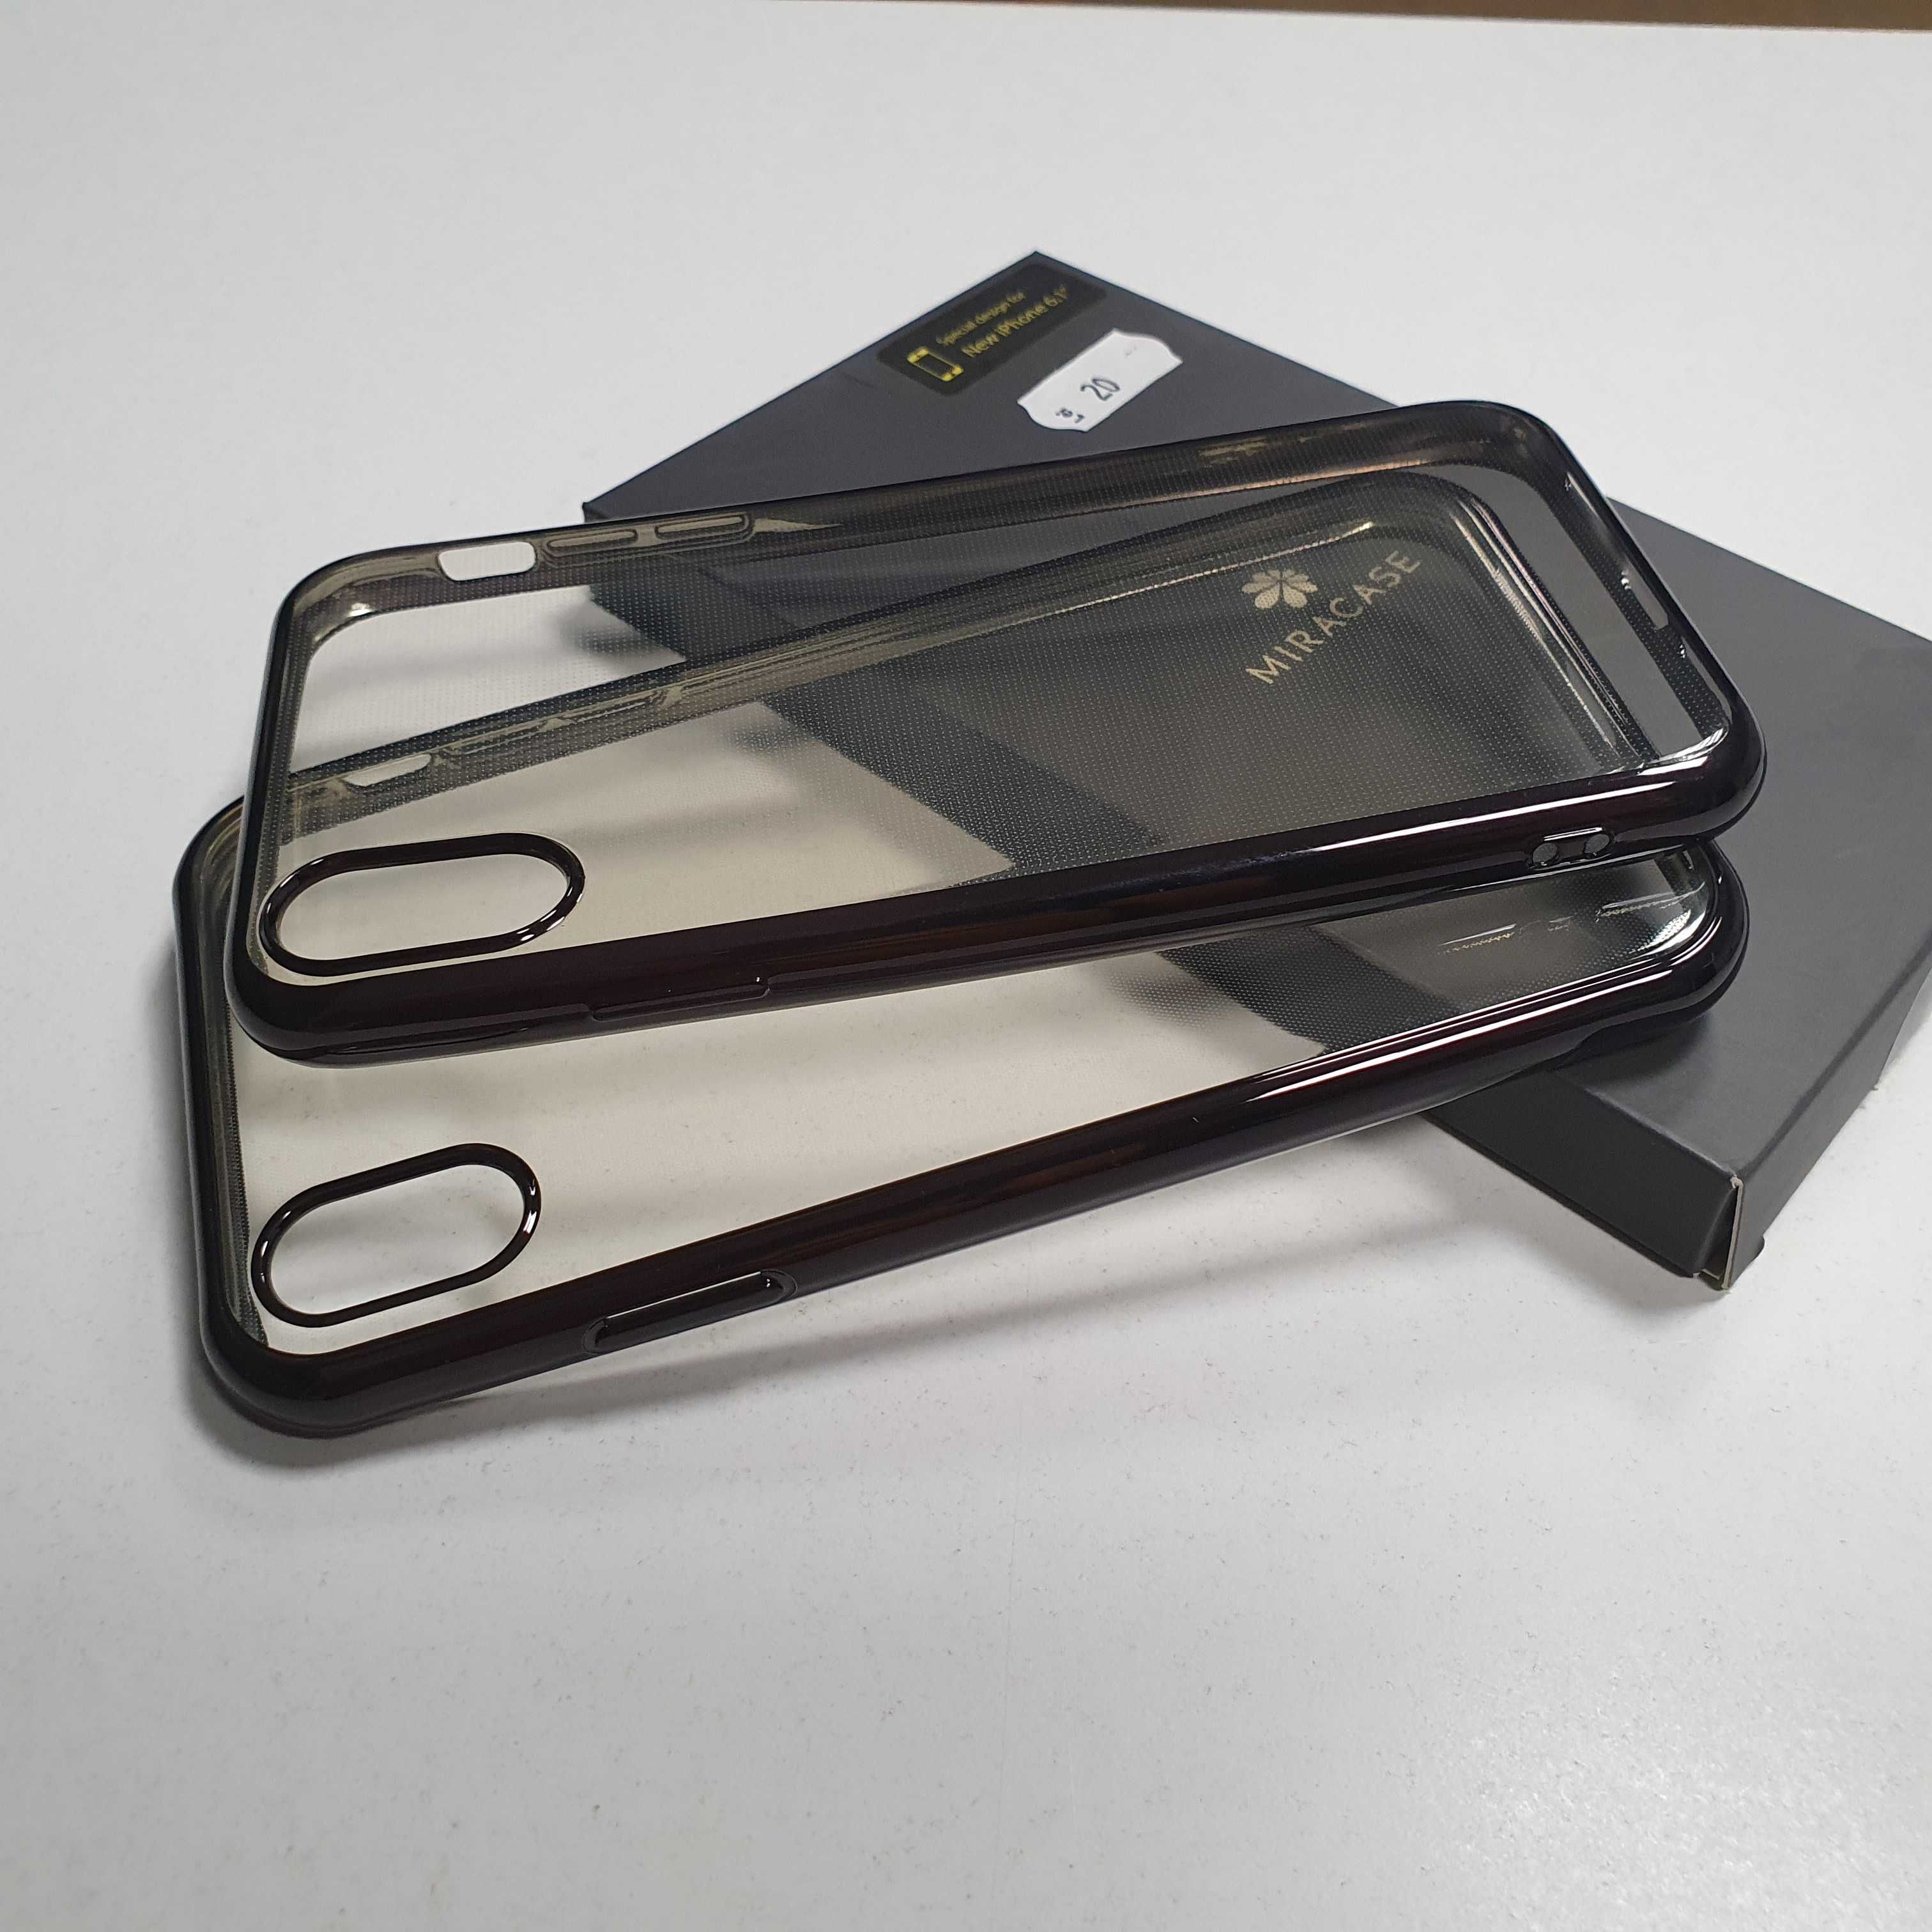 Husa iPhone XR - silicon transparent - contur negru